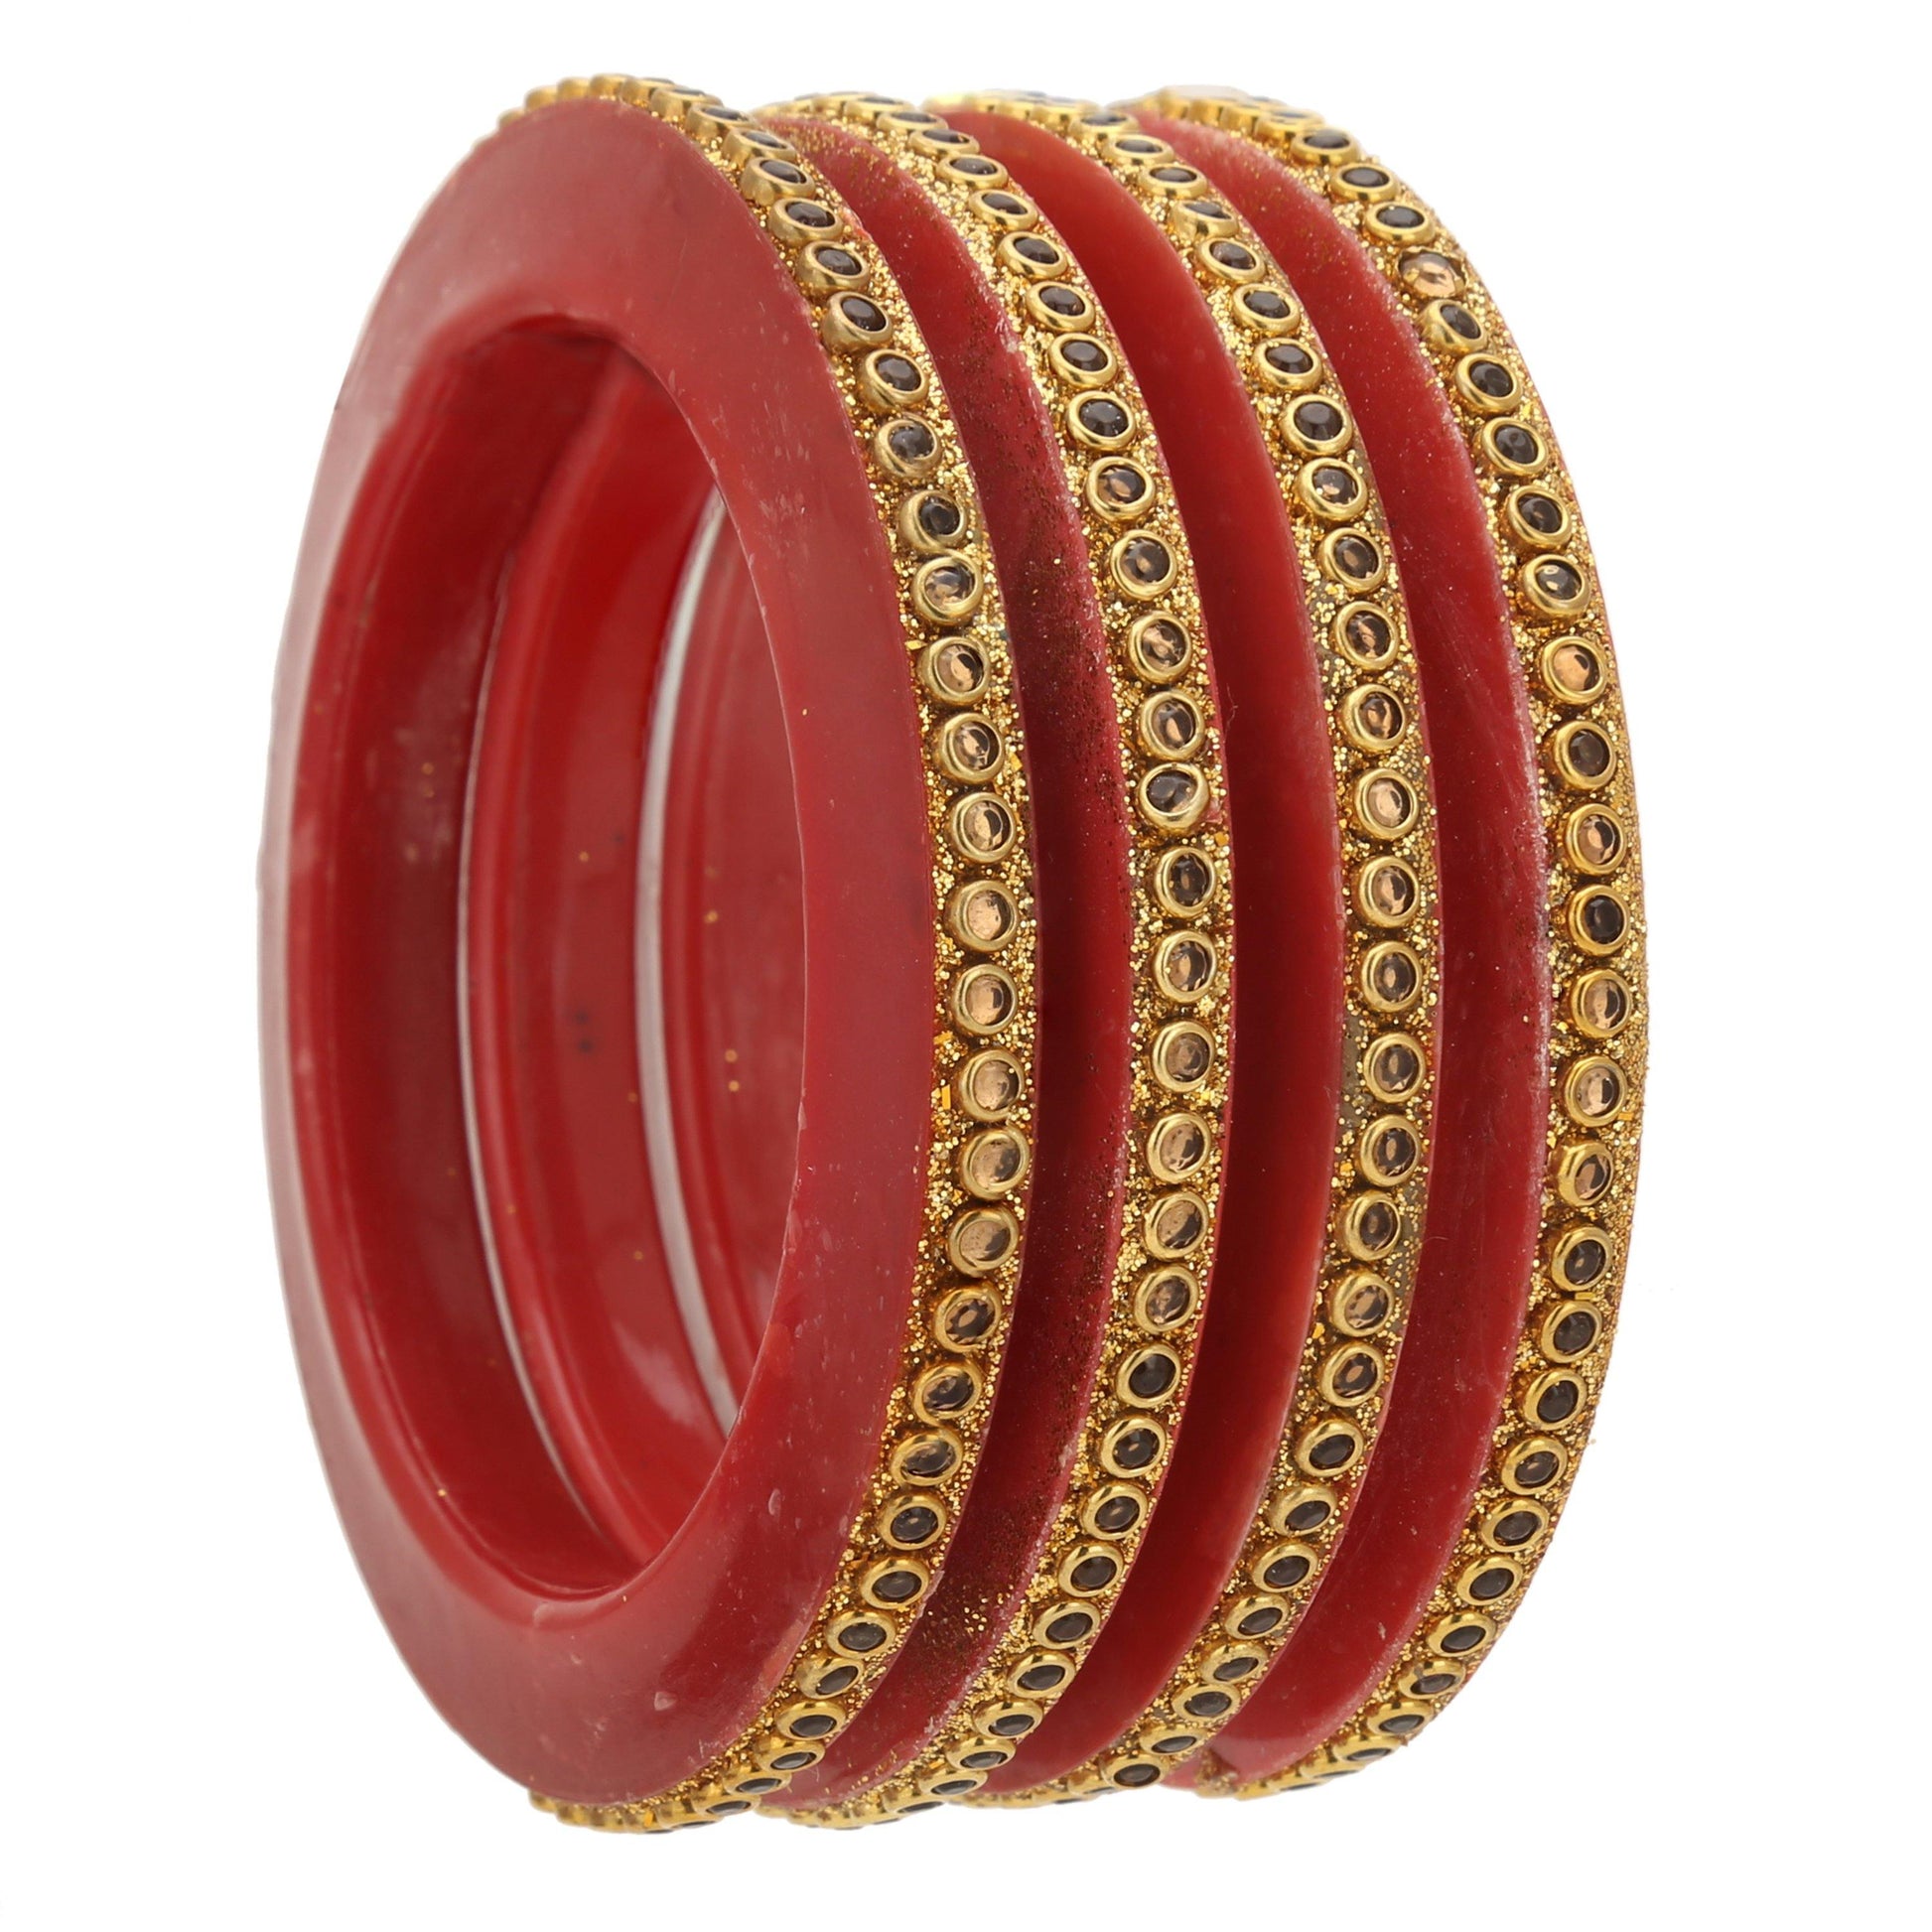 sukriti rajasthani handcrafted kundan pearl plastic red bridal chuda bangles for women – set of 18